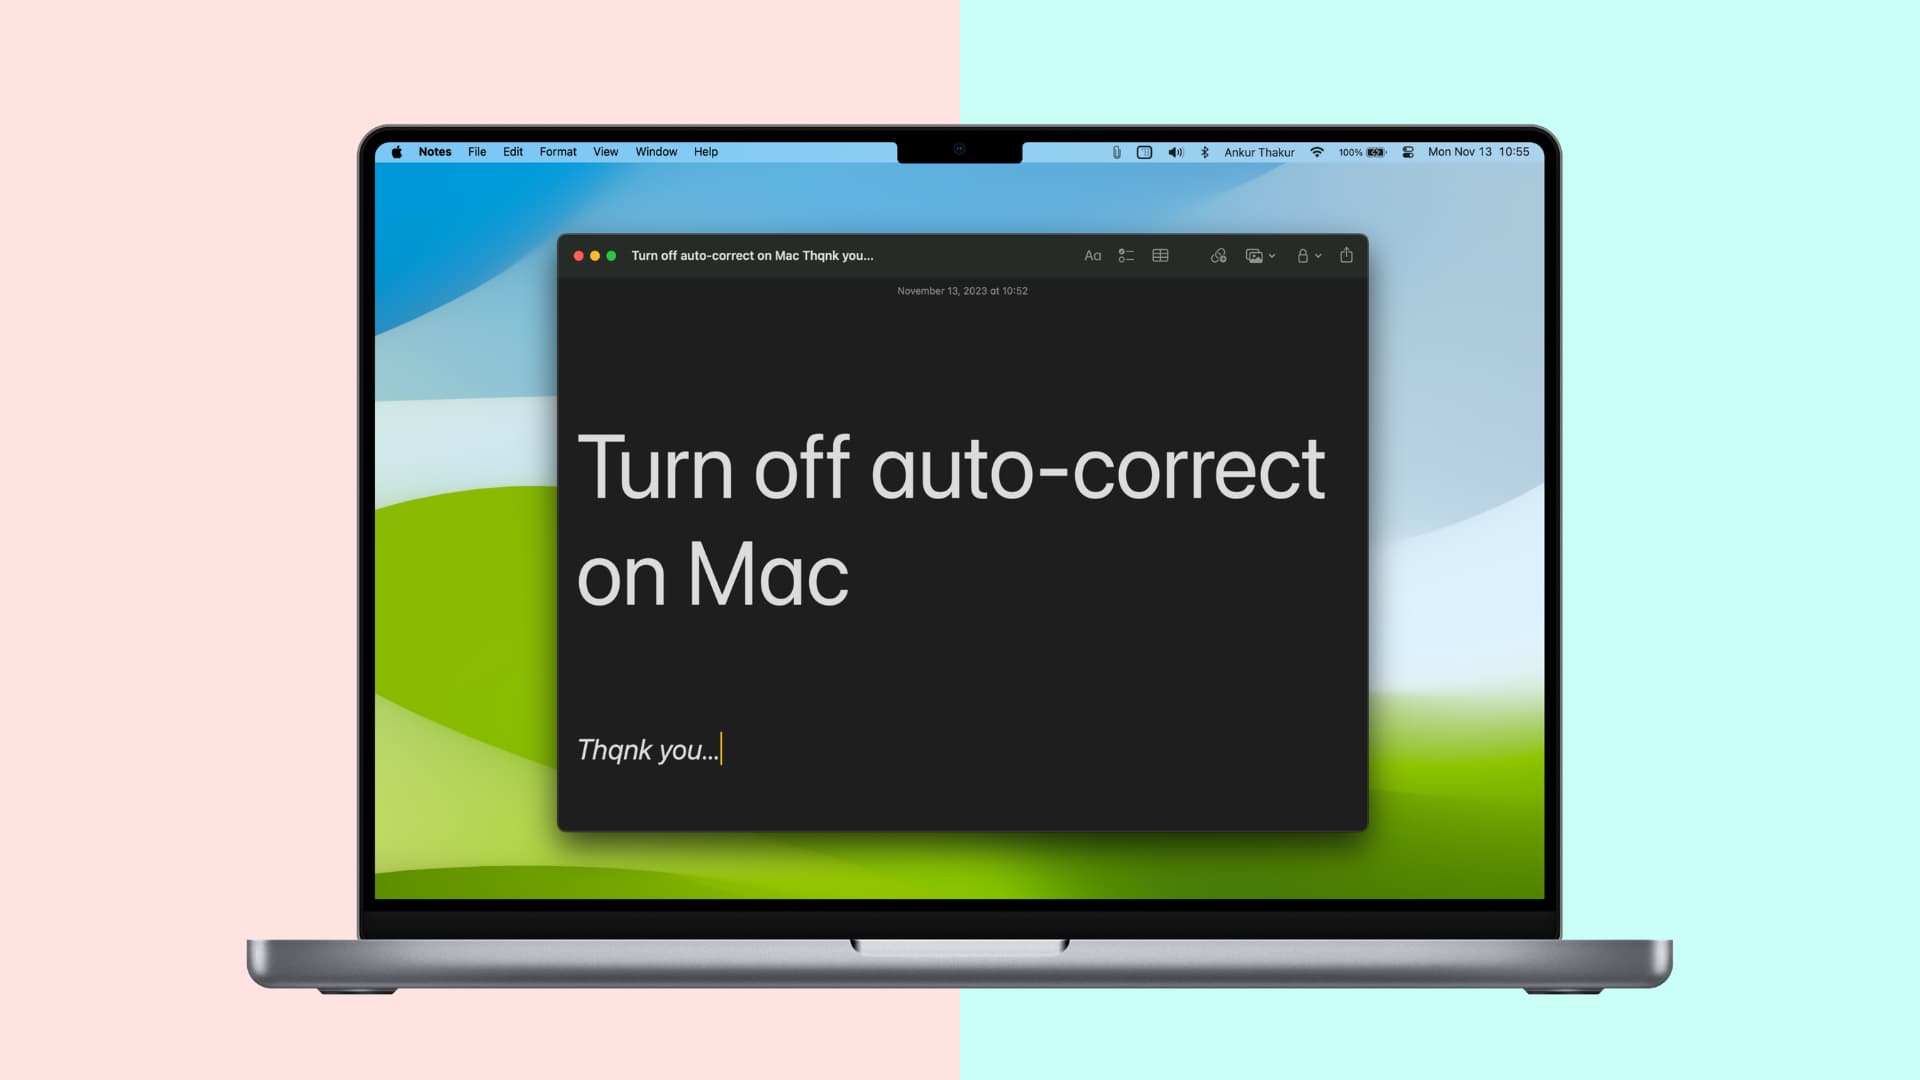 Turn off auto-correct on Mac